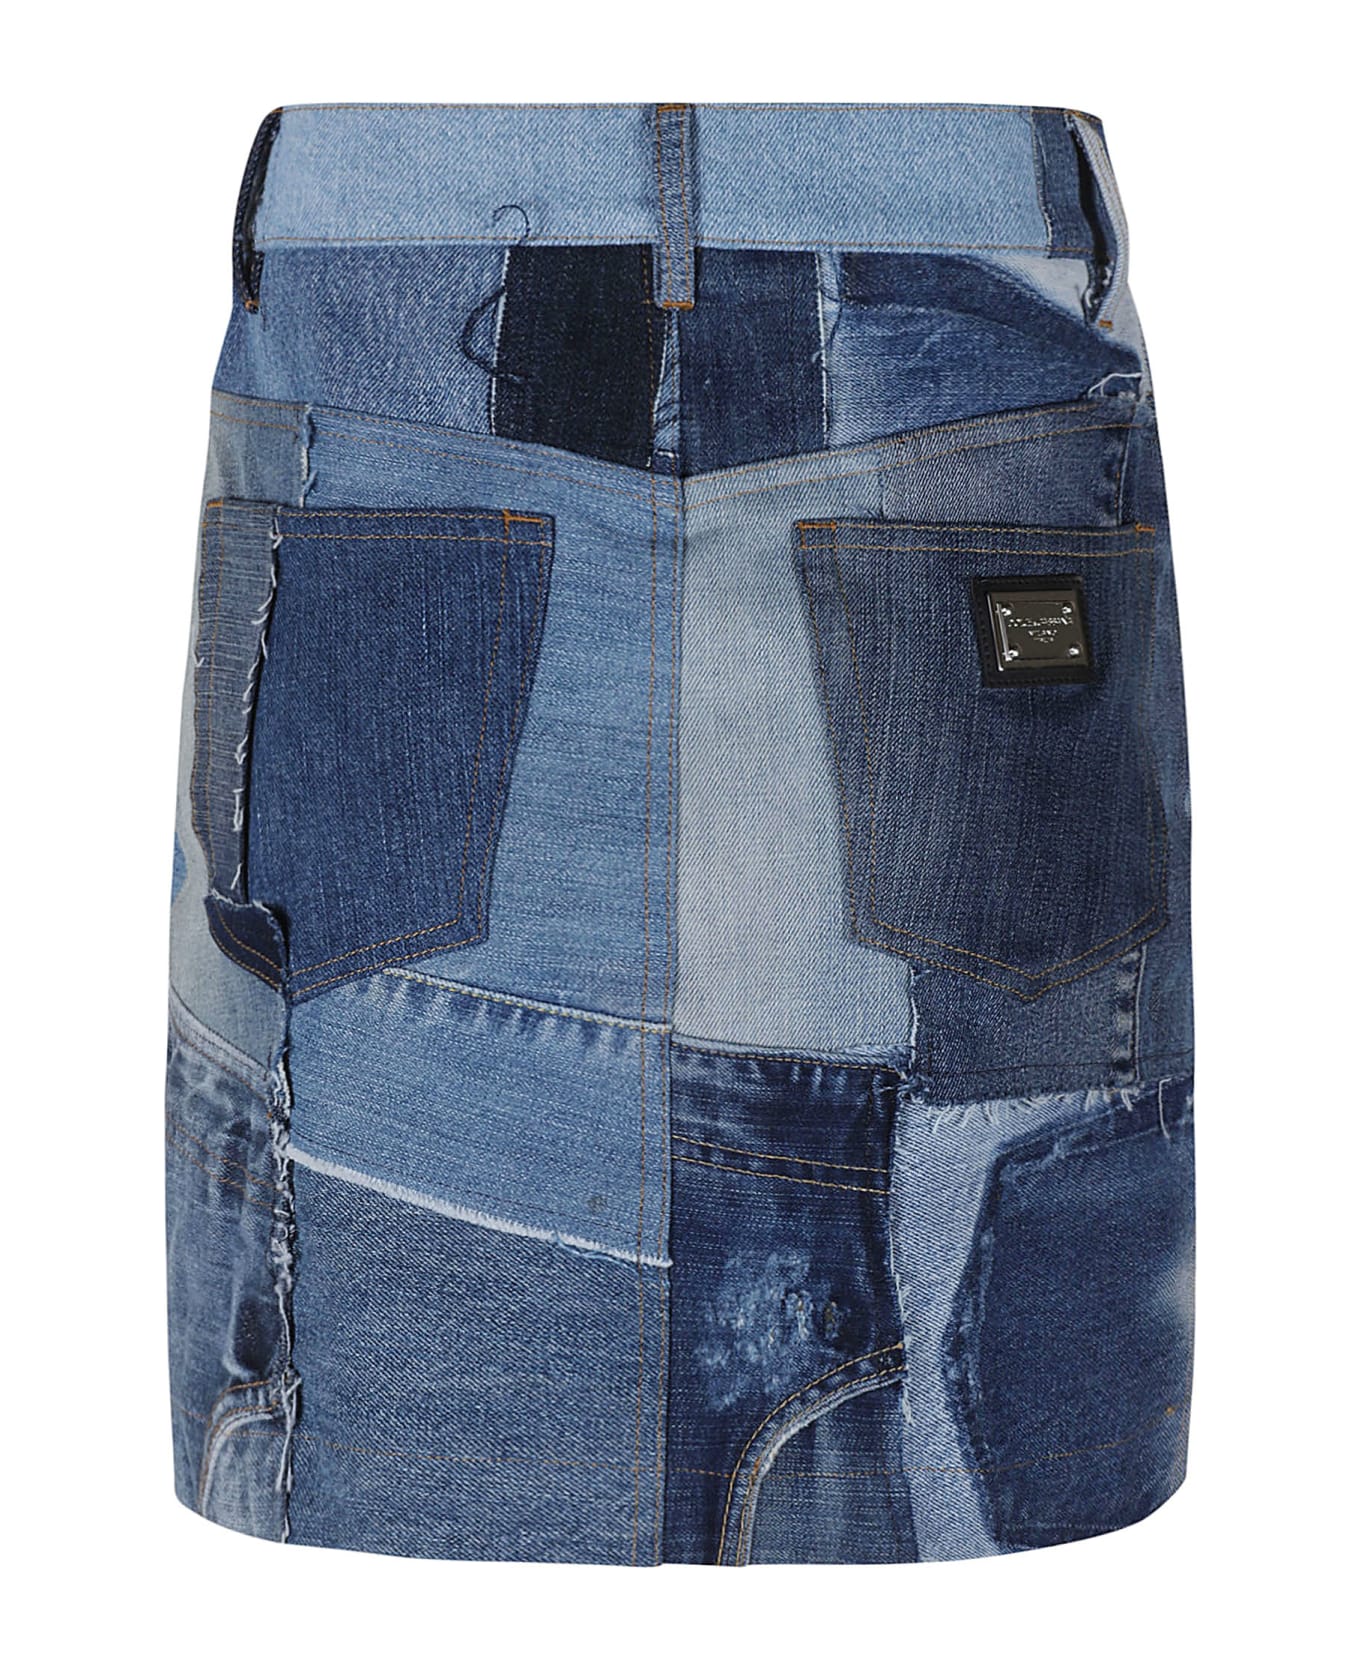 Dolce & Gabbana Denim Multi-patch Jeans - Blue